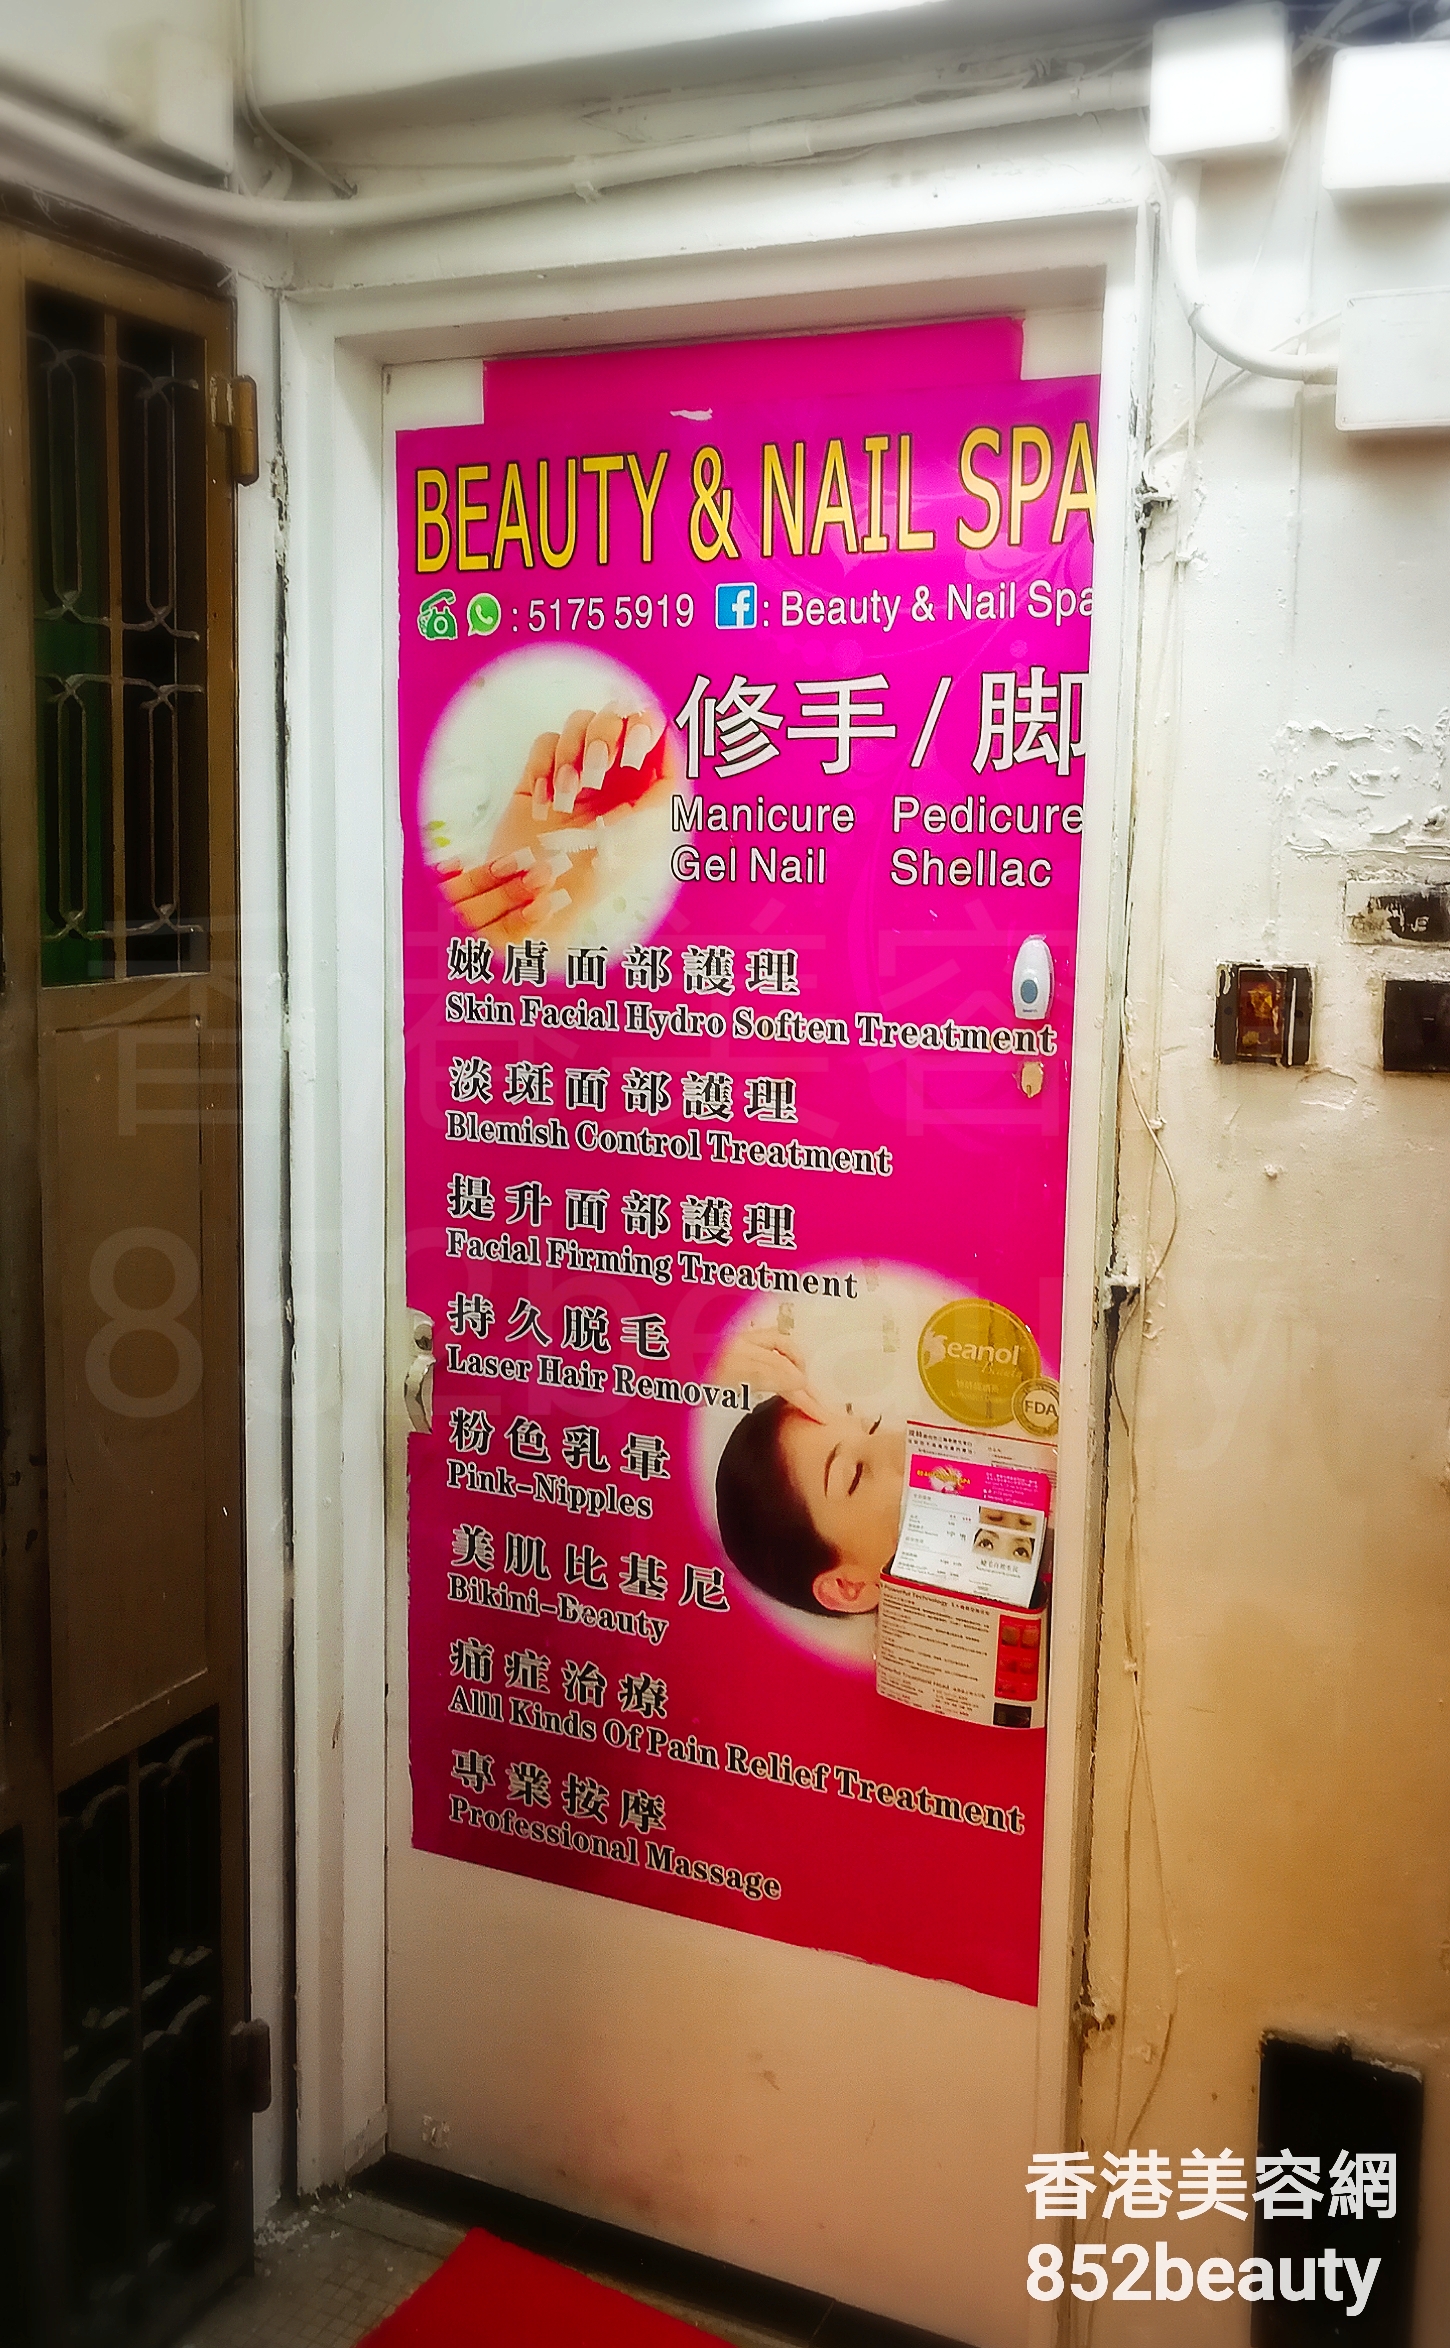 Facial Care: Beauty & Nail Spa